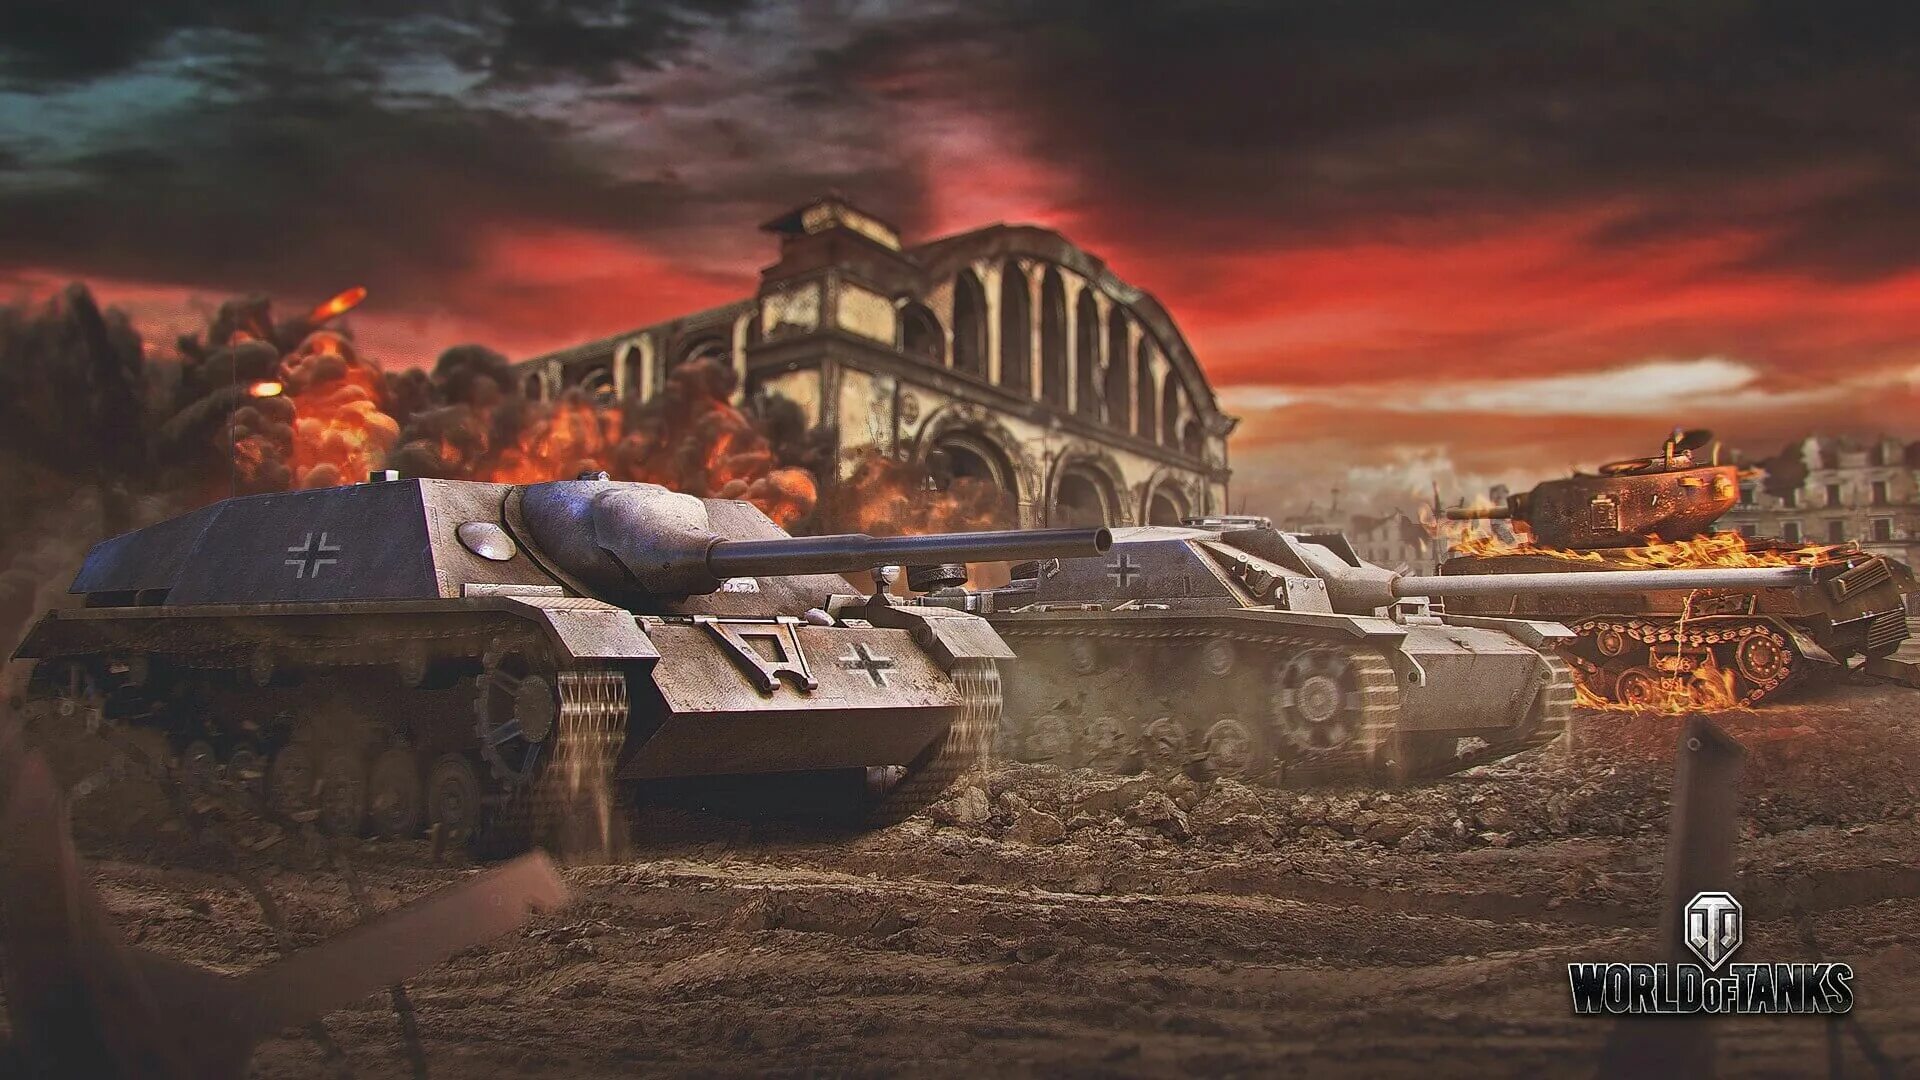 Beyond мир танков. Танки ворлд оф танк. World of Tanks Jagdpanzer IV. STUG IV ворлд оф танк. Ворлд оф танк арт.